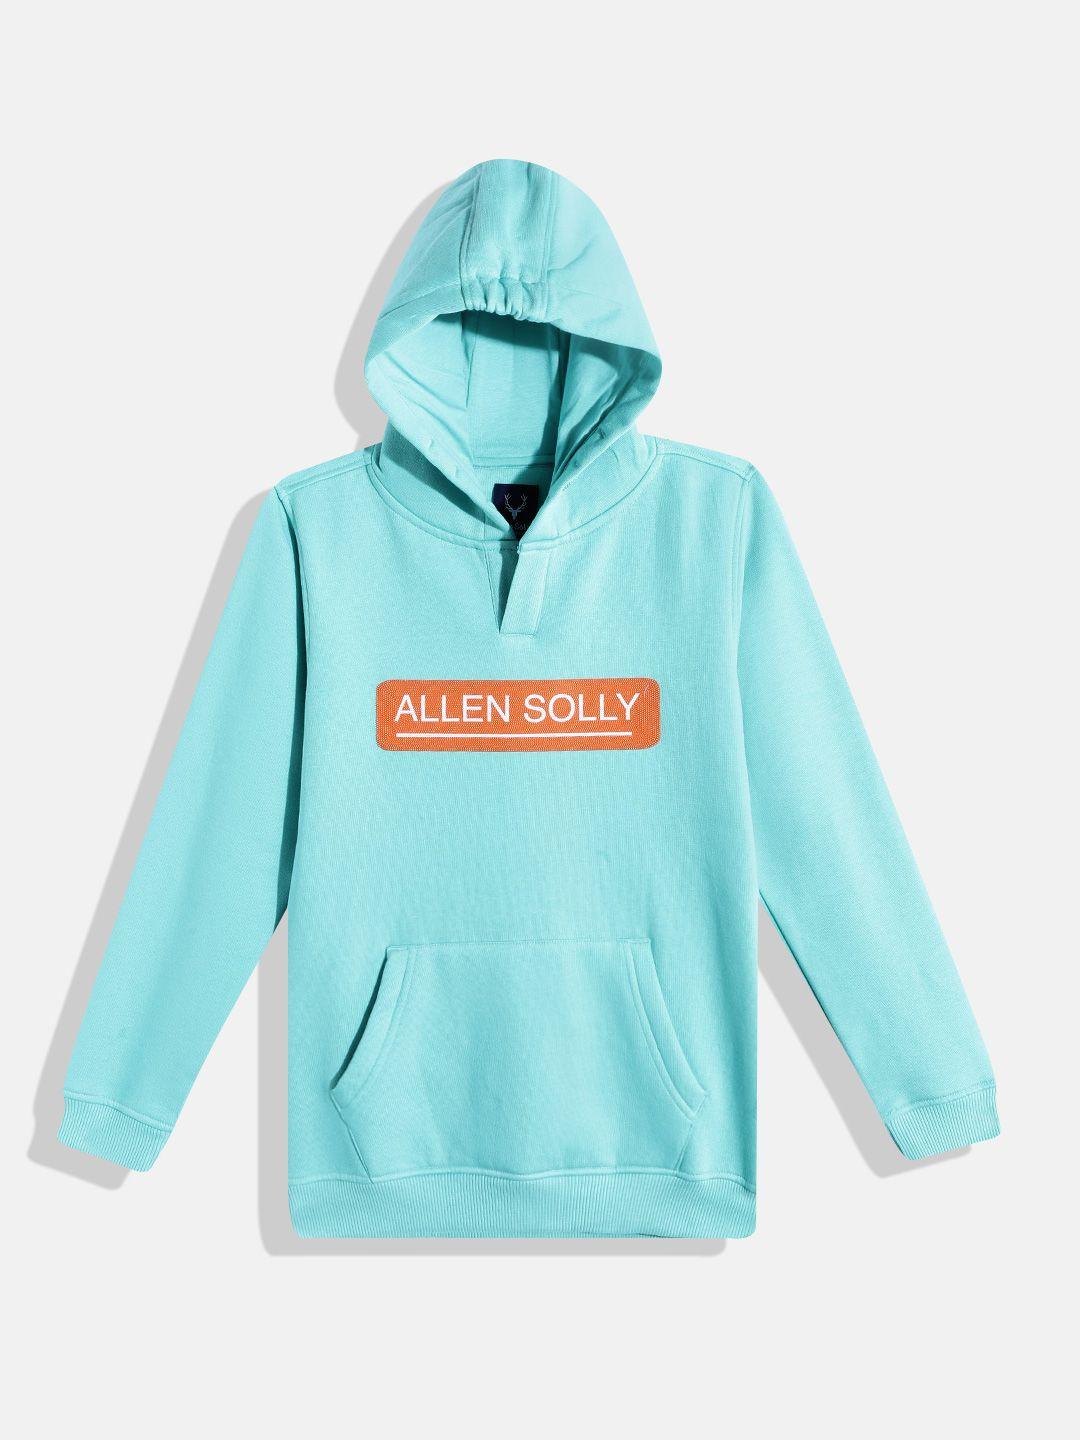 allen solly junior boys turquoise blue & orange brand logo print hooded sweatshirt